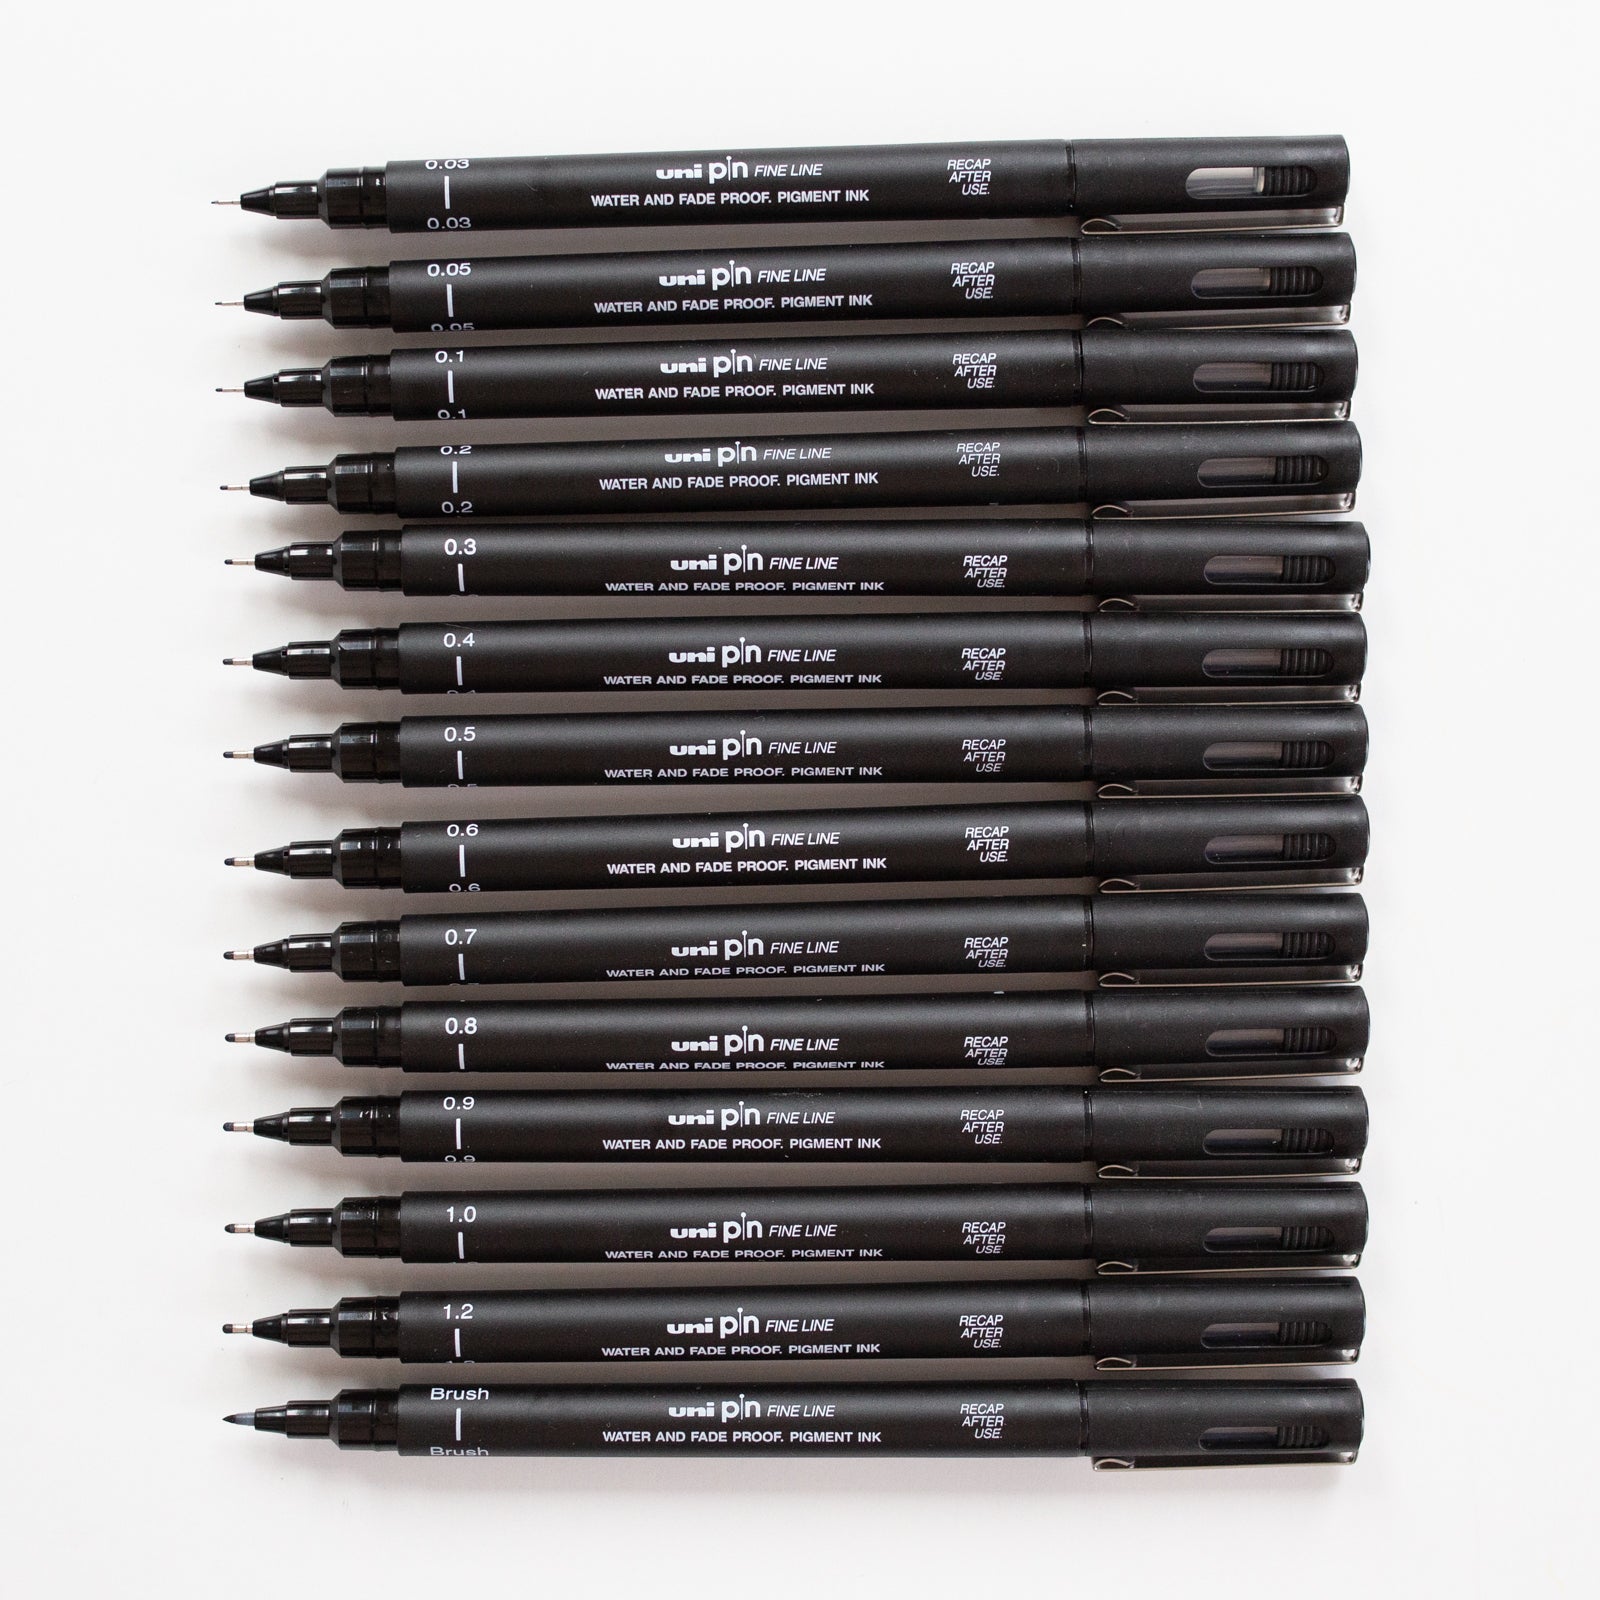 Drawing Pen (Uni Pin) Fine Line Black 0.03, 0.05, 0.1, 0.2, 0.3, 0.4, 0.5, 0.6, 0.7